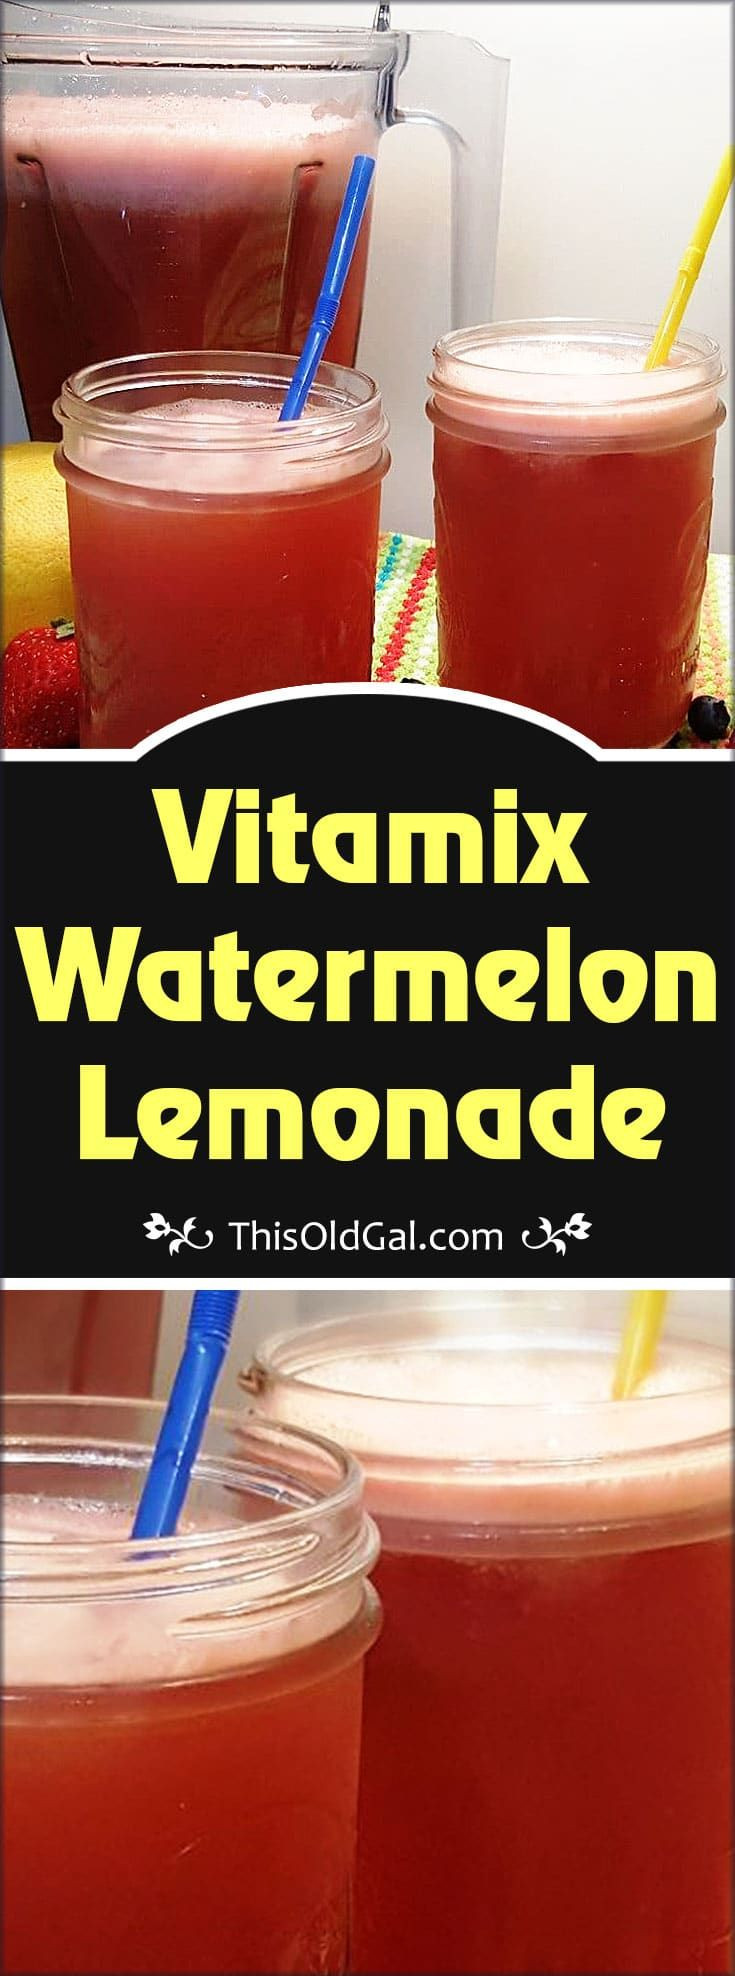 Vegan Vitamix Recipes
 Vitamix Watermelon Lemonade